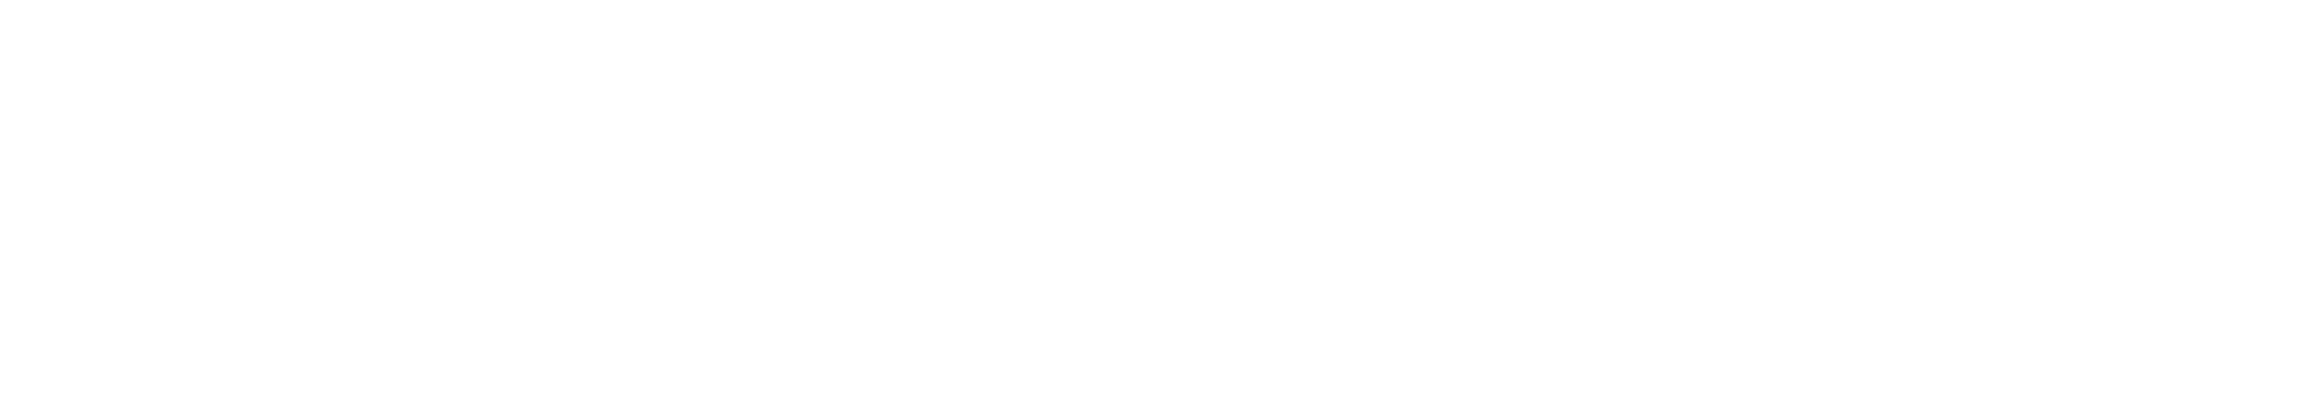 Harbor Group Management logo for Apple Ridge Apartments